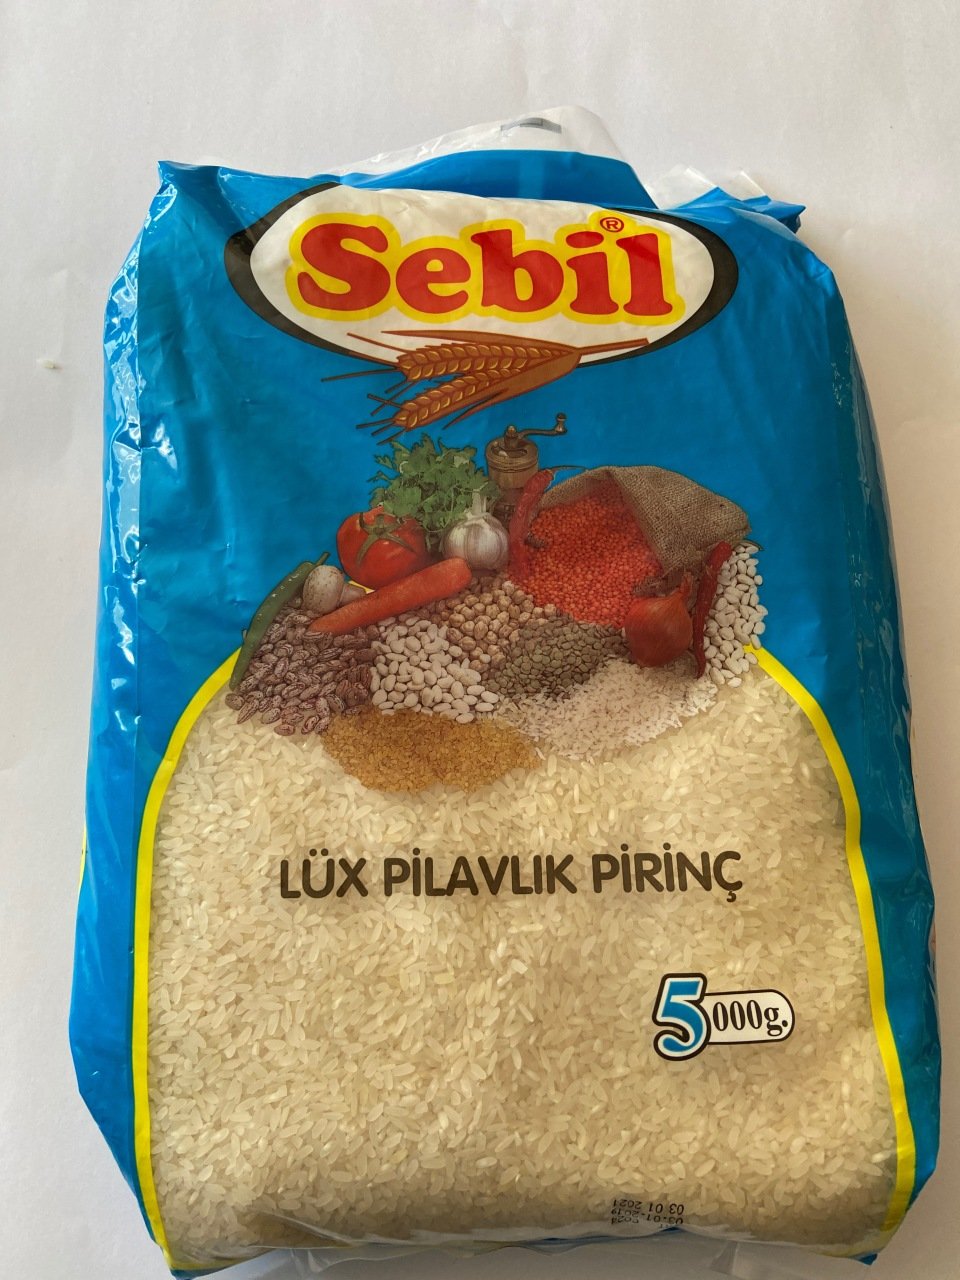 Sebil Lüx Pilavlık Pirinç 5000gr